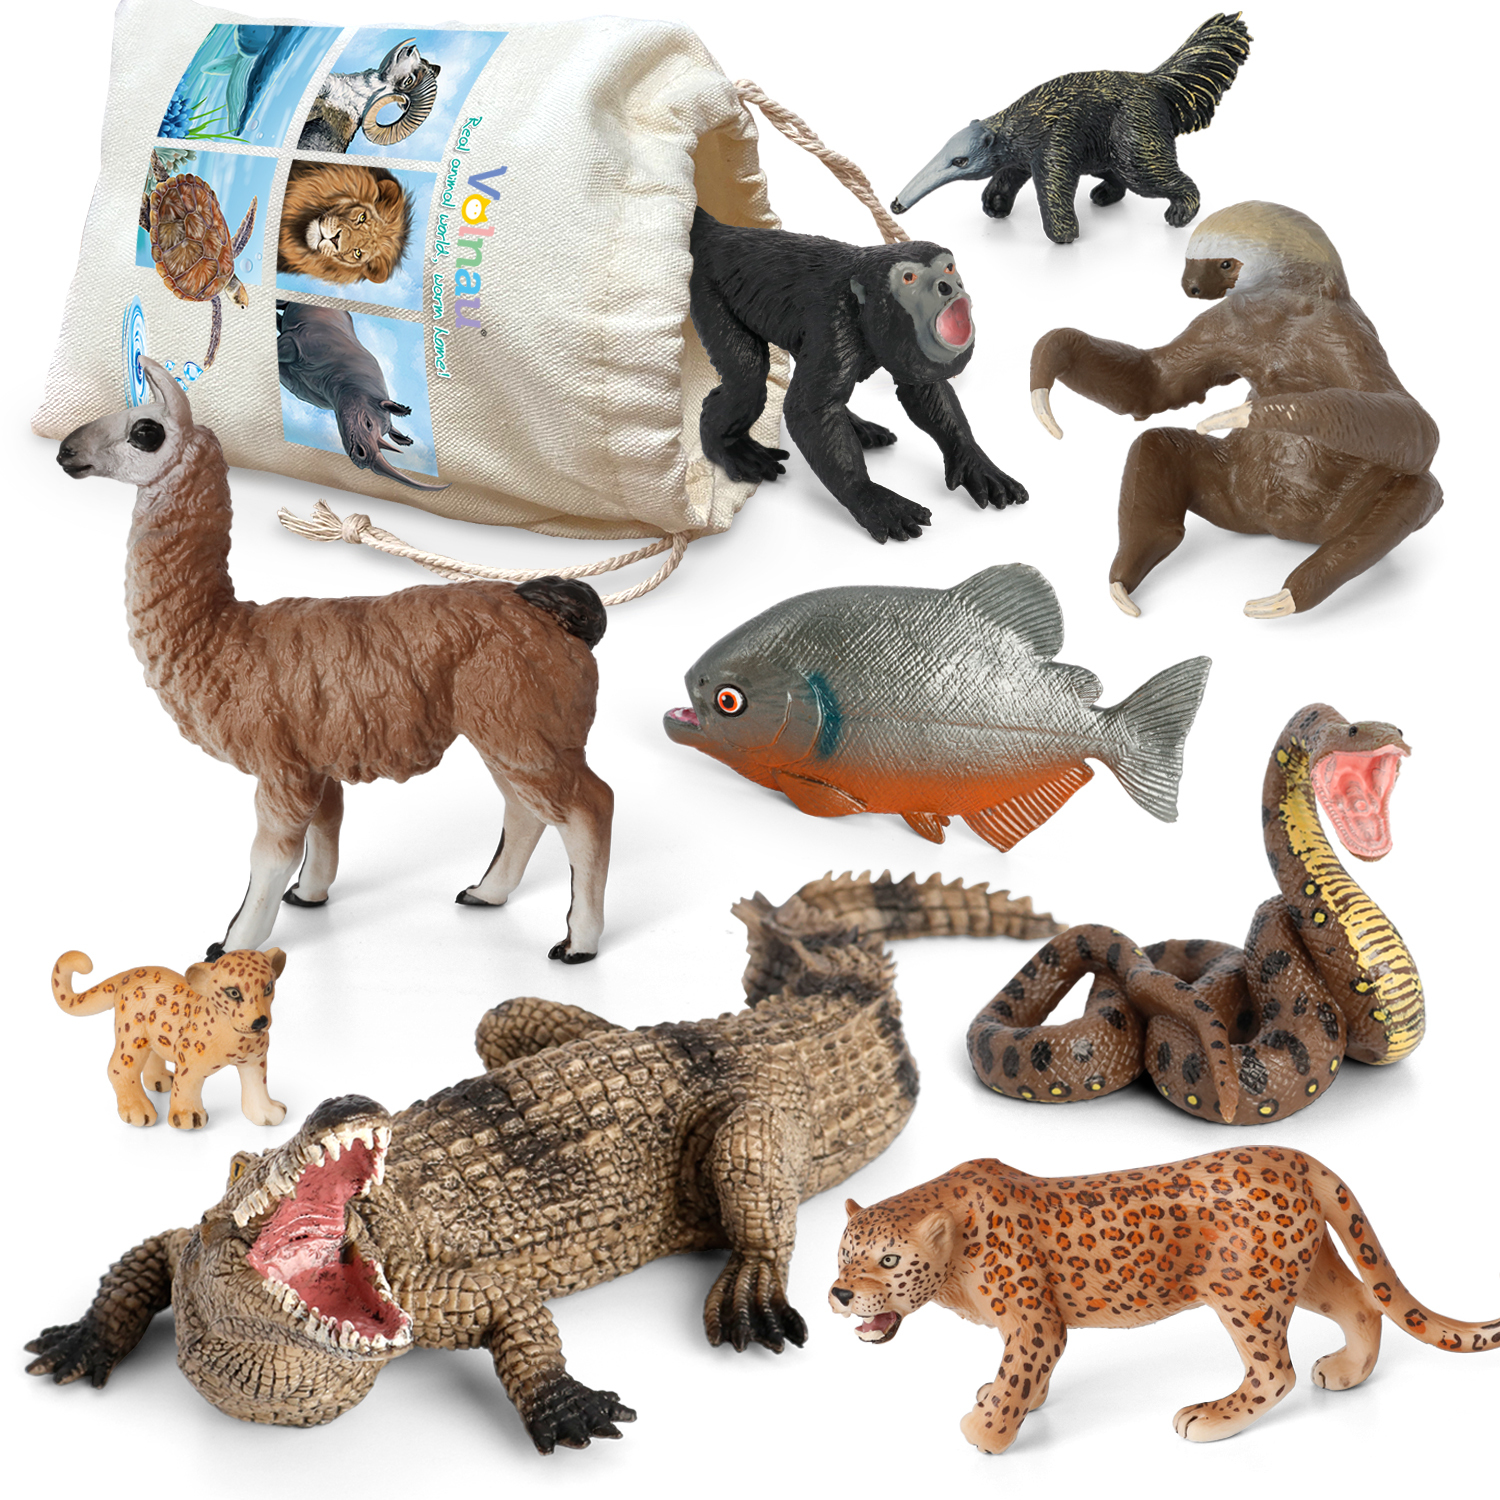 Wildlife Jungle Animal Model Plastic Figures Kids Toy Home Decoration Xmas Gifts 